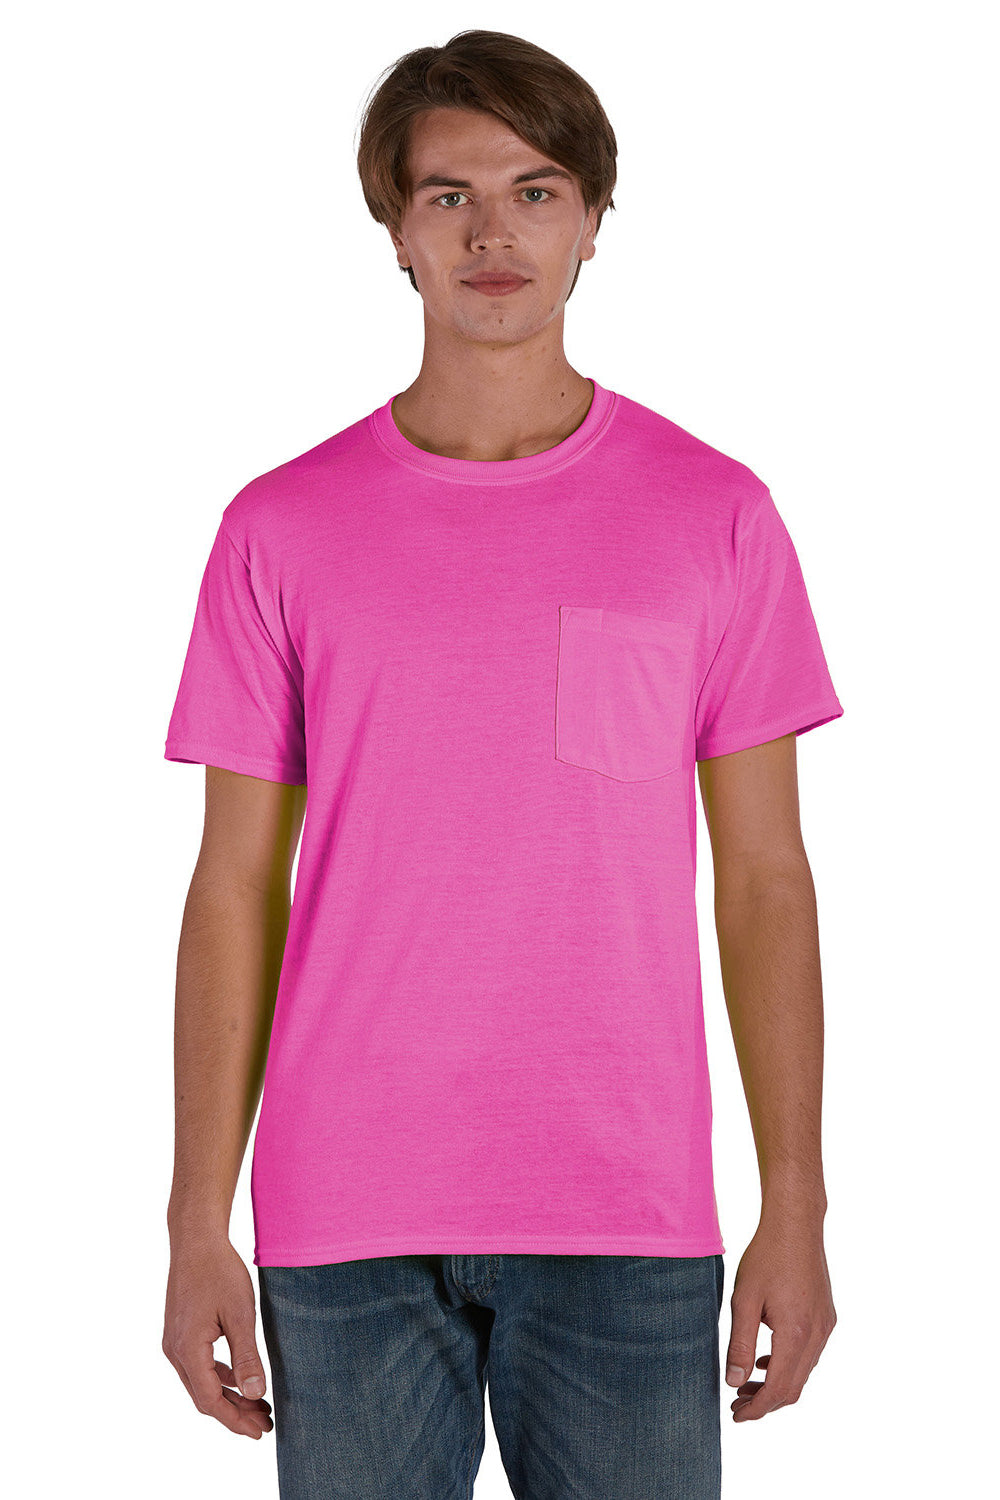 Hanes W110 Mens Workwear Short Sleeve Crewneck T-Shirt w/ Pocket Safety Pink Front